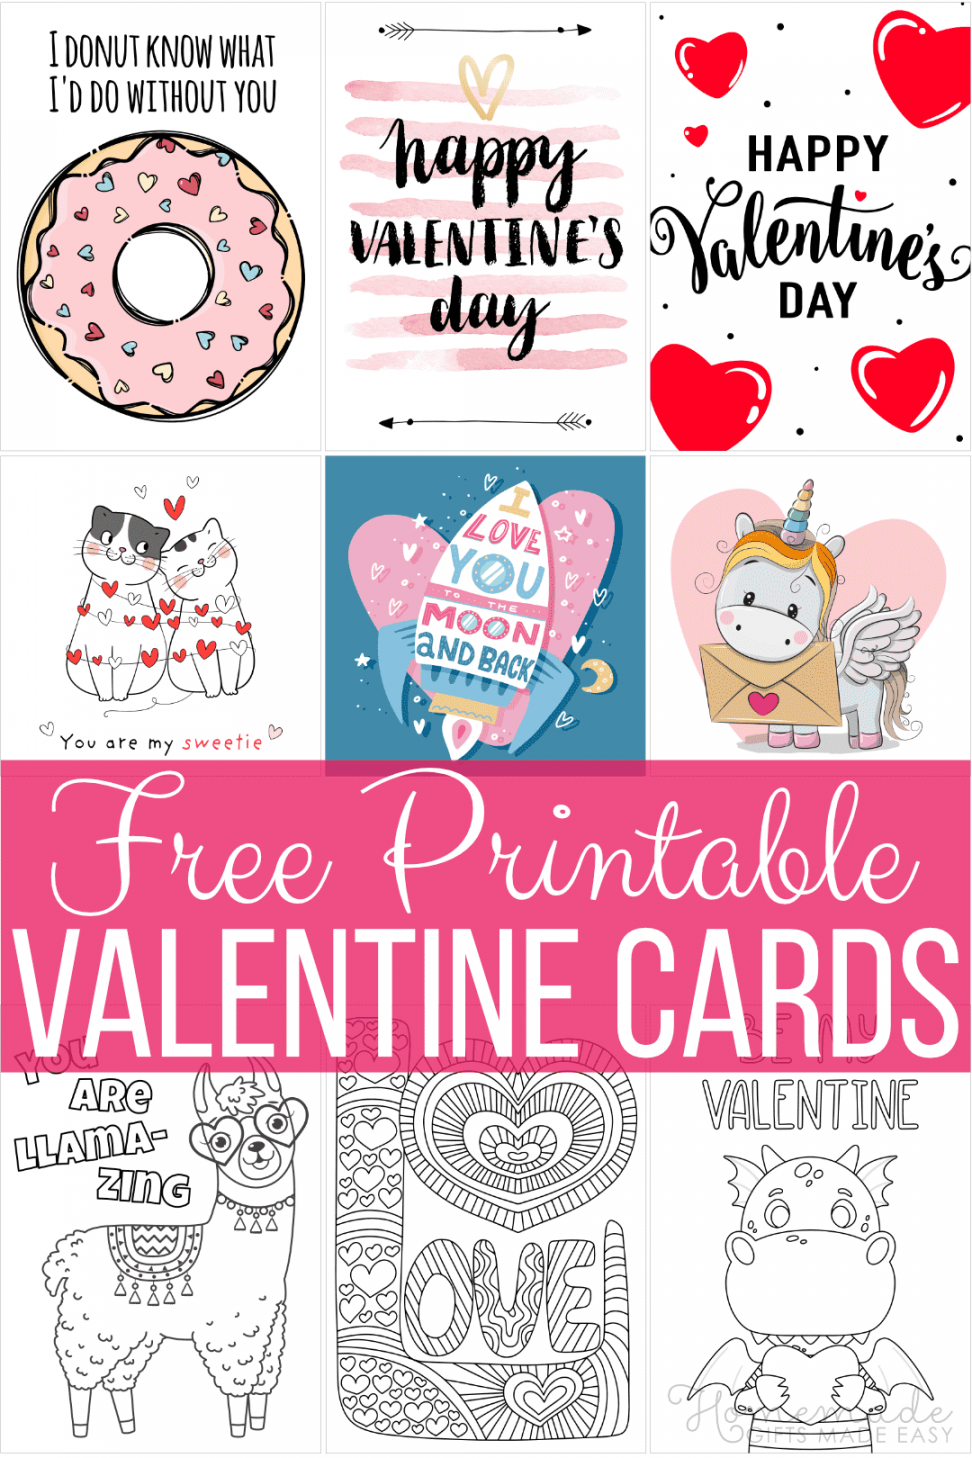 Free Printable Valentines Day Cards - Printable -  Free Printable Valentine Cards for